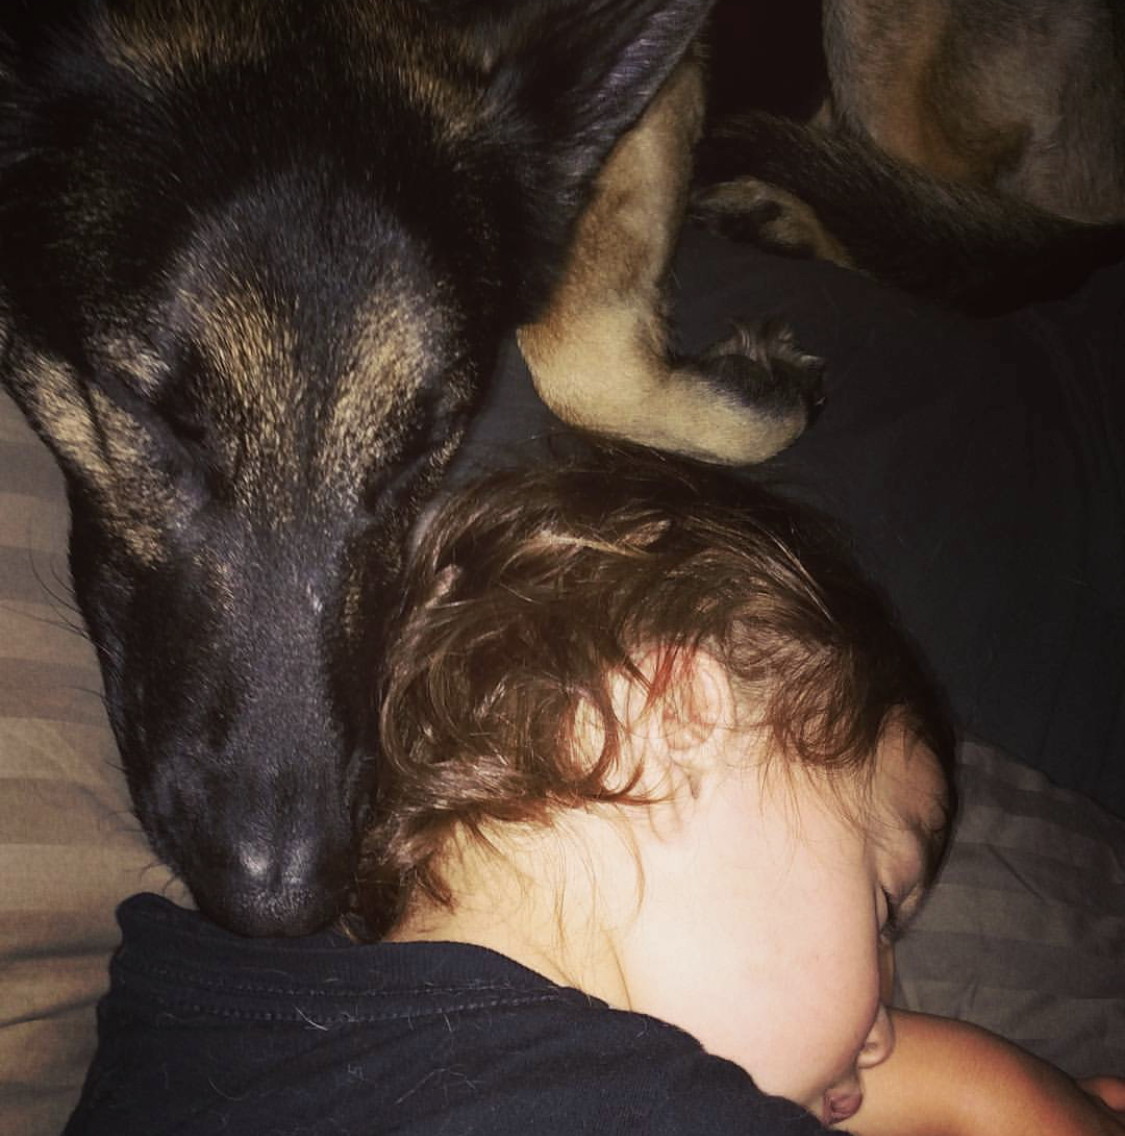 A German Shepherd dog sleeping on the bed with kid